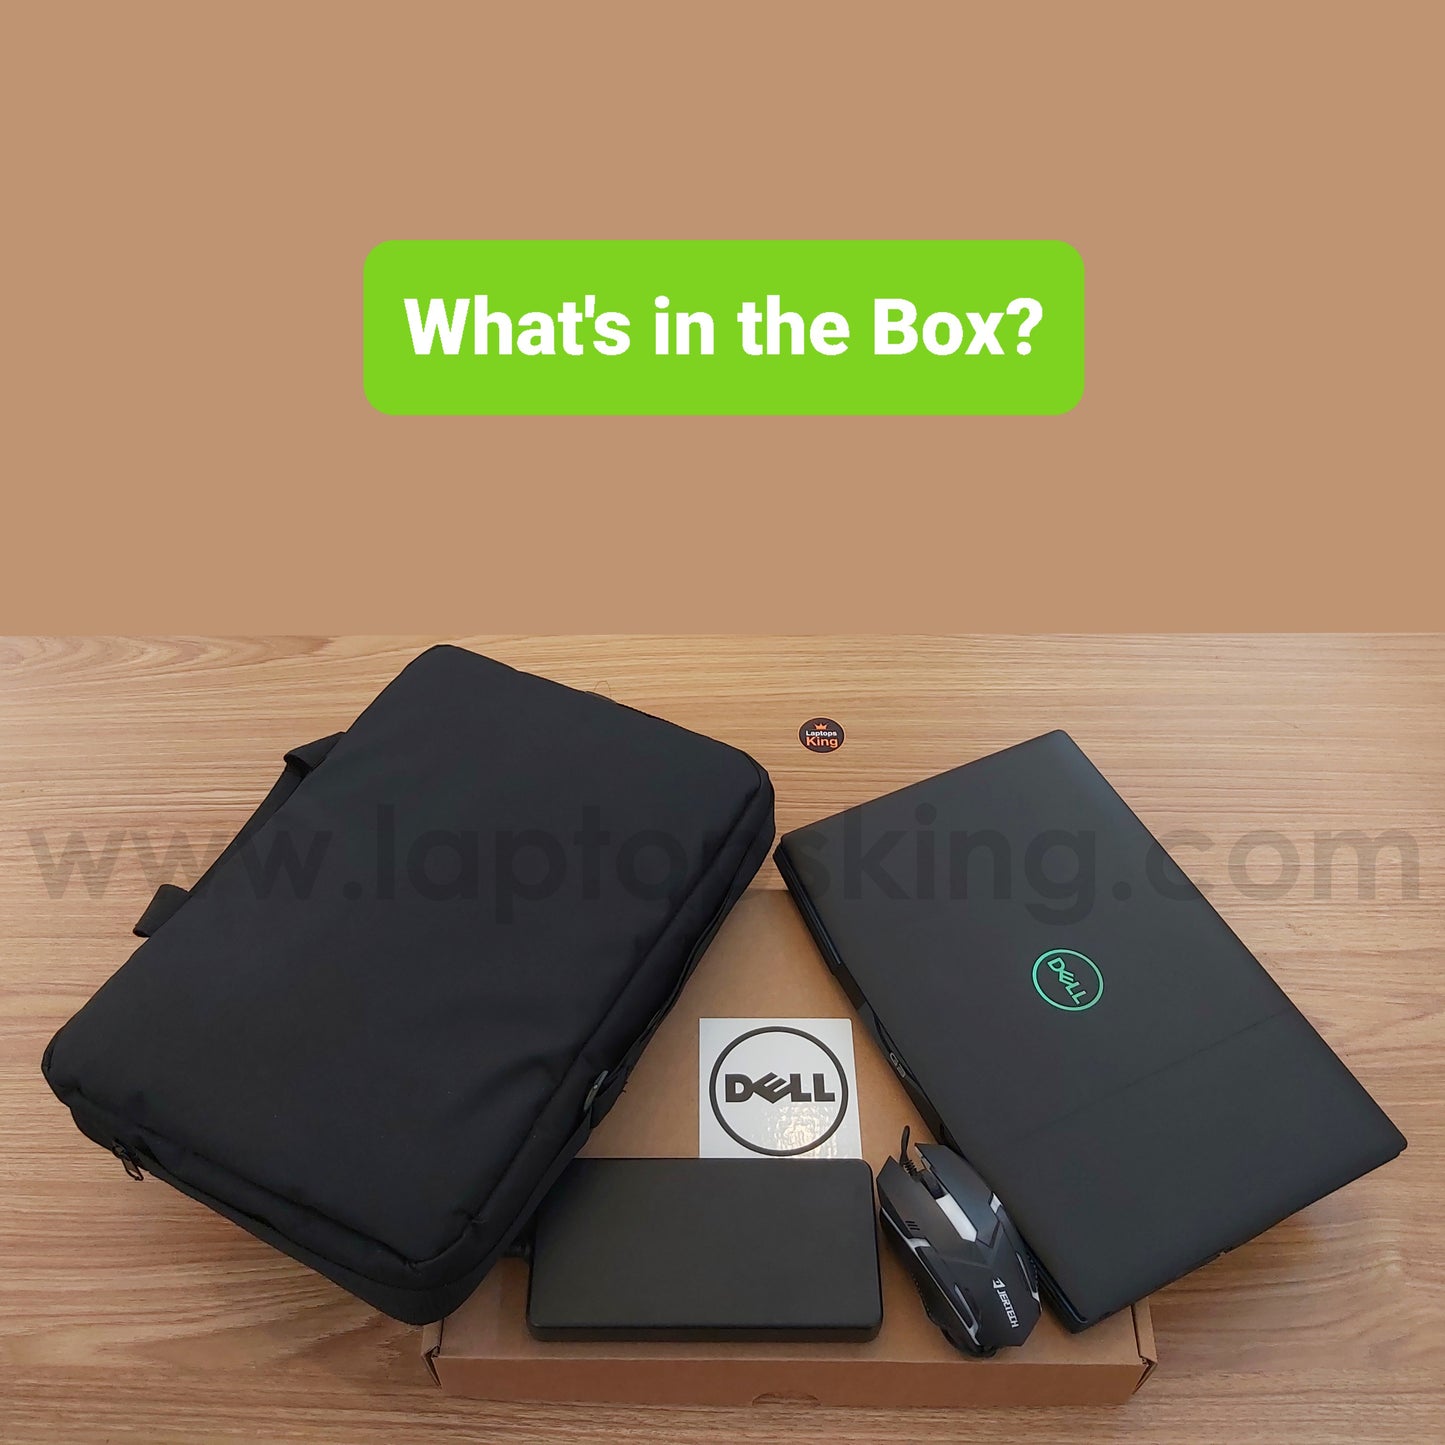 Dell G3 3500 i7-10750h Gtx 1650 Ti 120hz Gaming Laptop (Open Box)